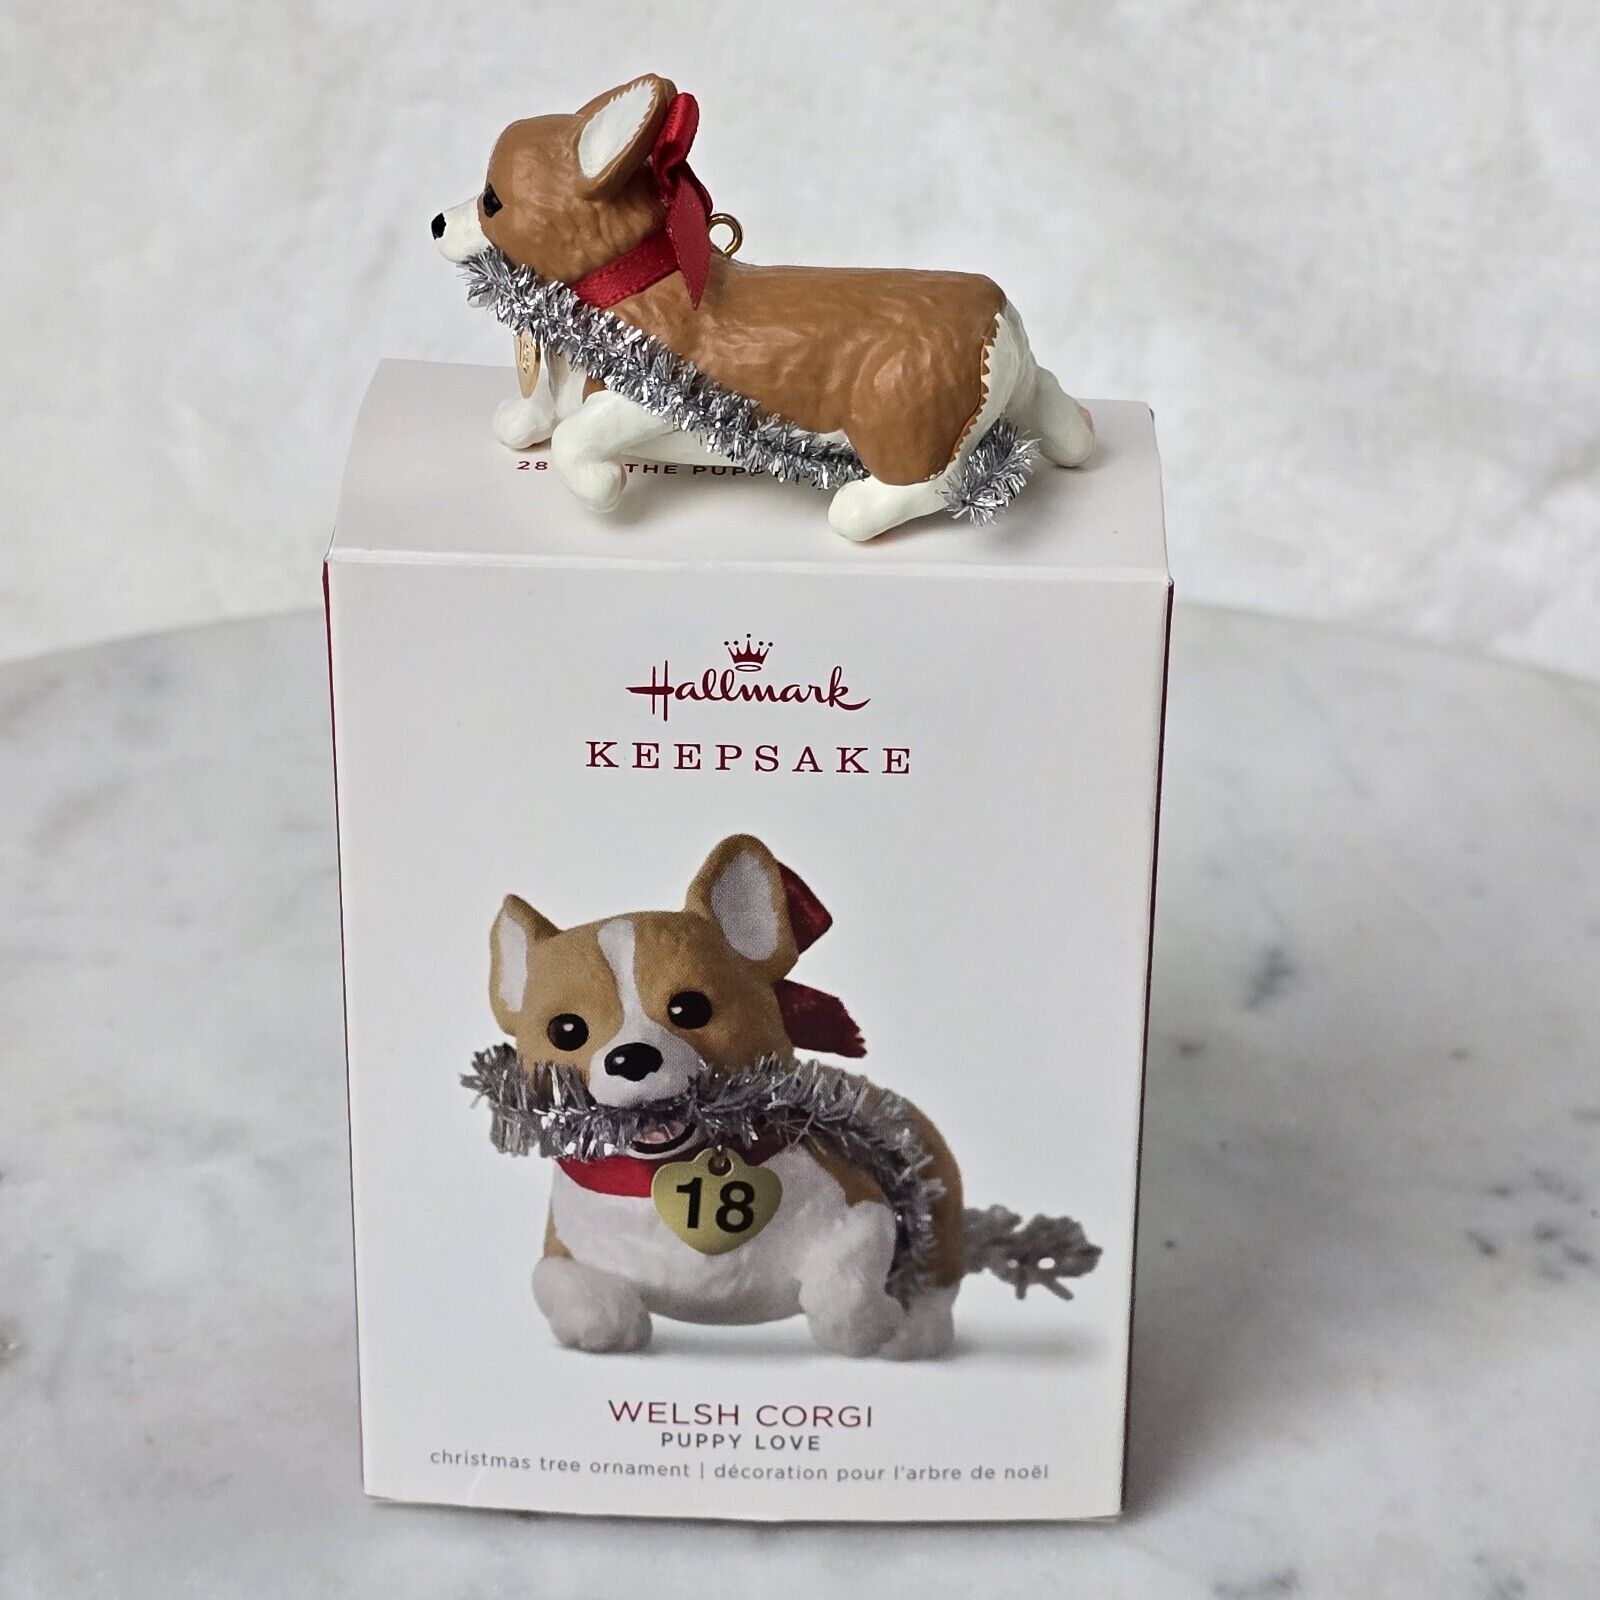 Hallmark Keepsake Ornament 2018 Welsh Corgi - 28th in the Puppy Love Series NEW